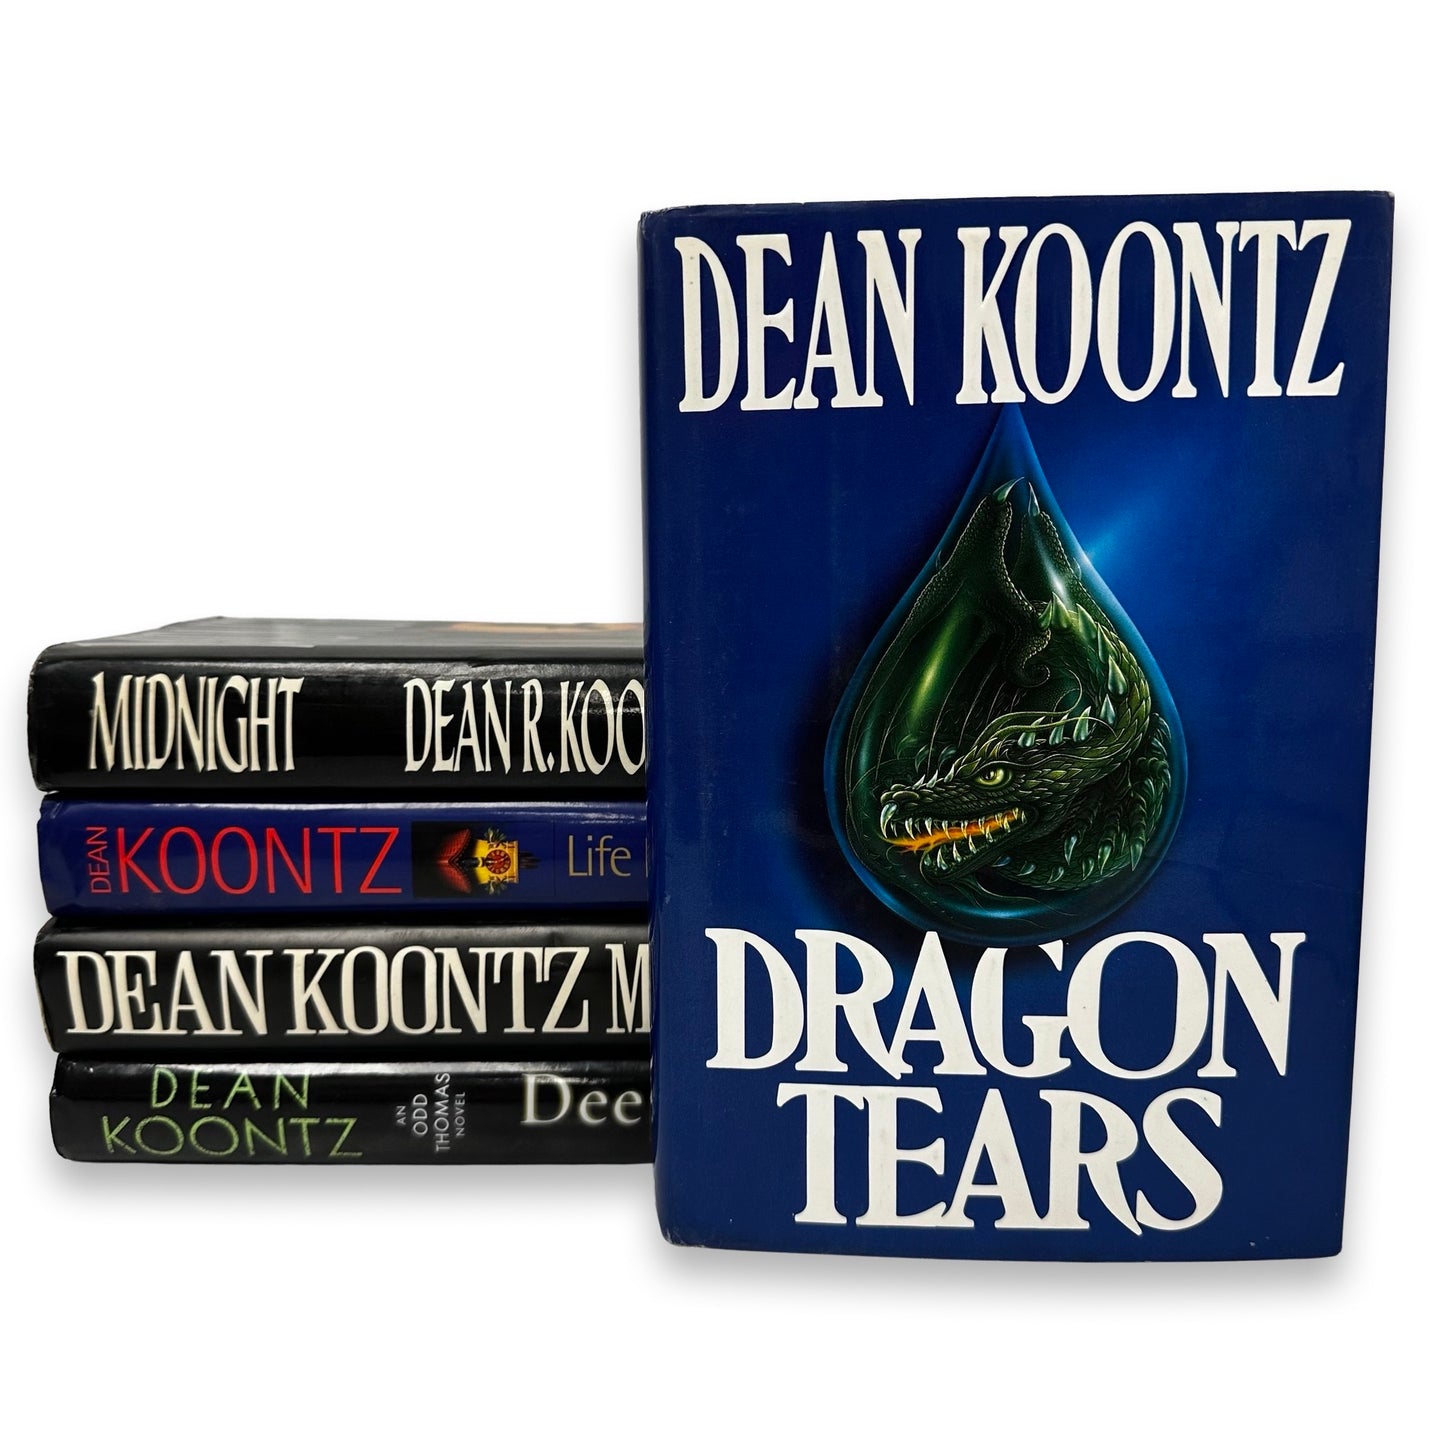 Dean Koontz books - Hardcovers